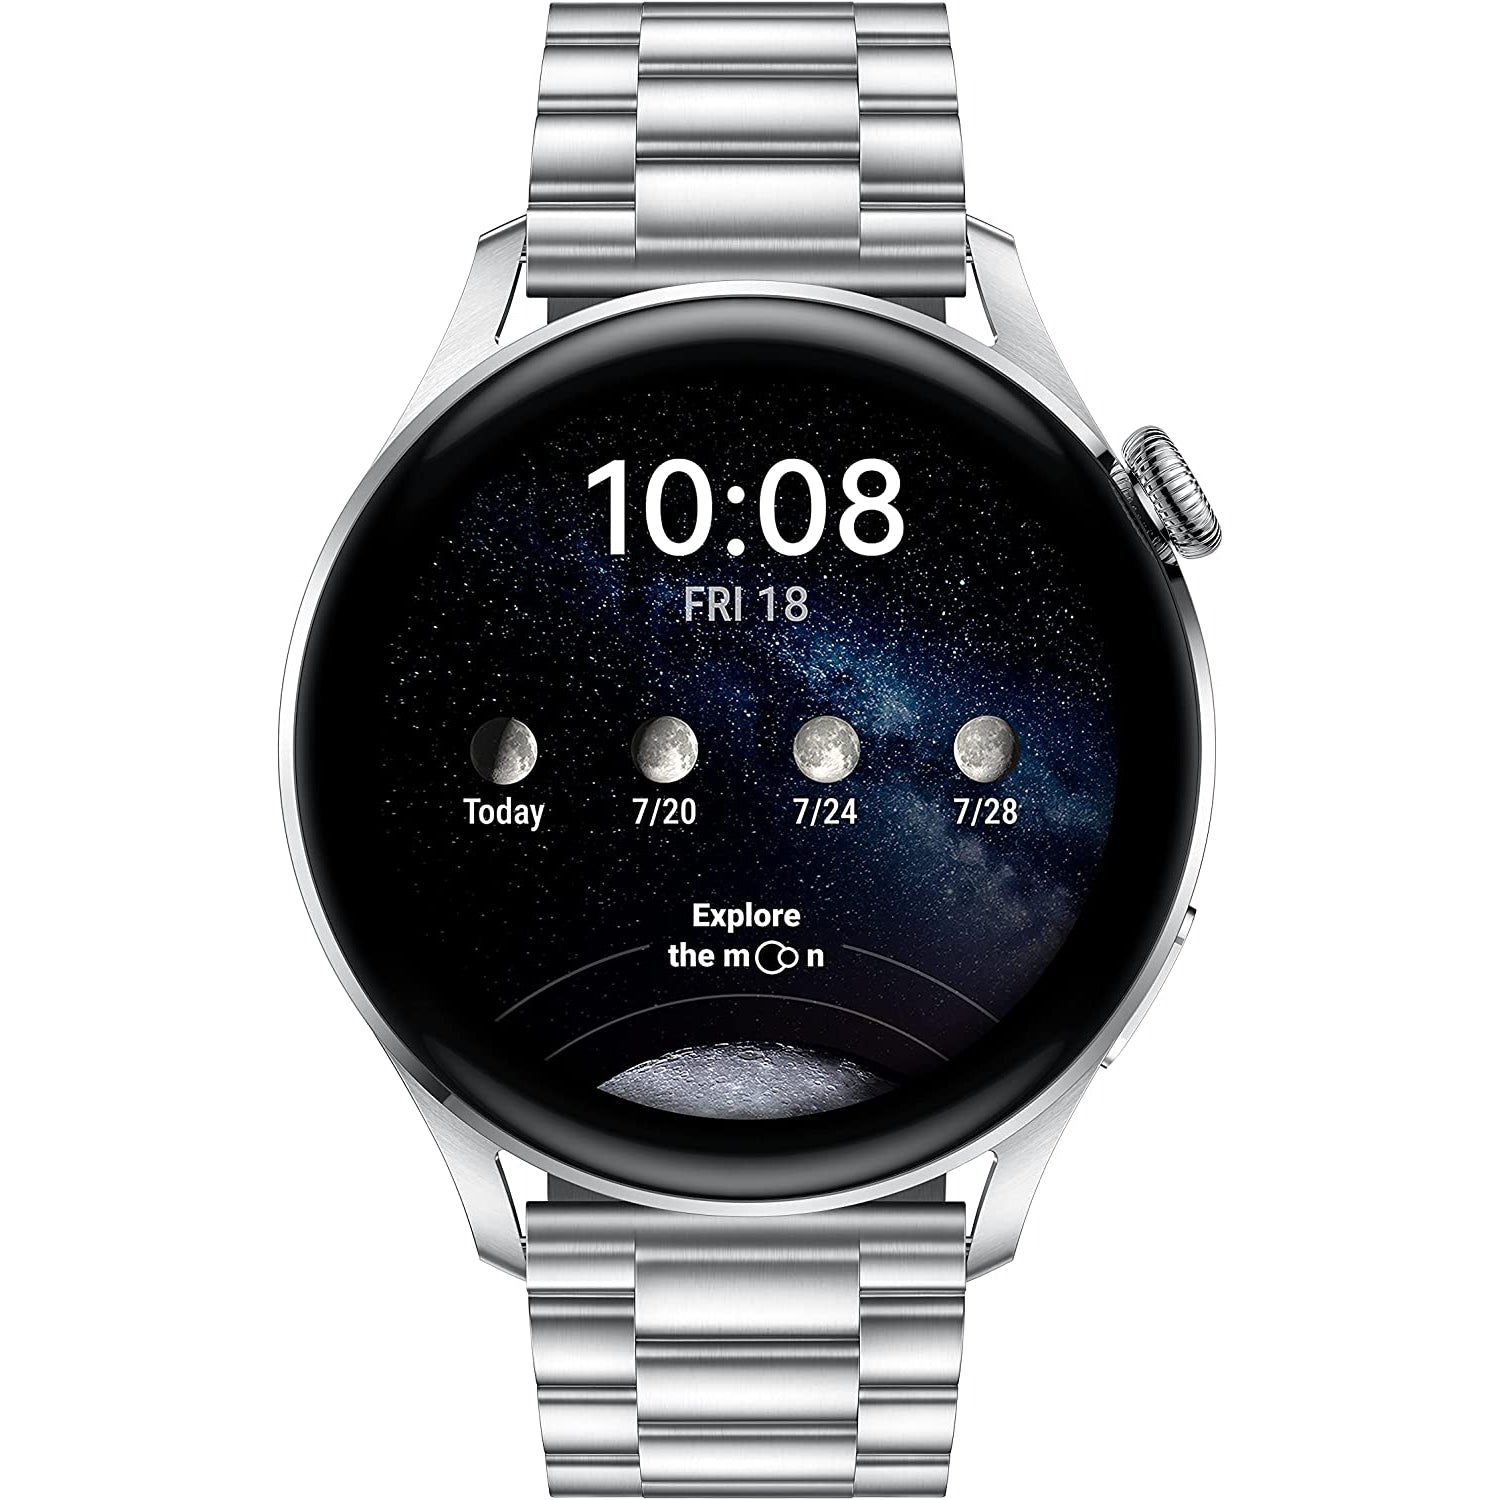 Huawei Watch 3 Elite Smart Watch 46mm - Stainless Steel